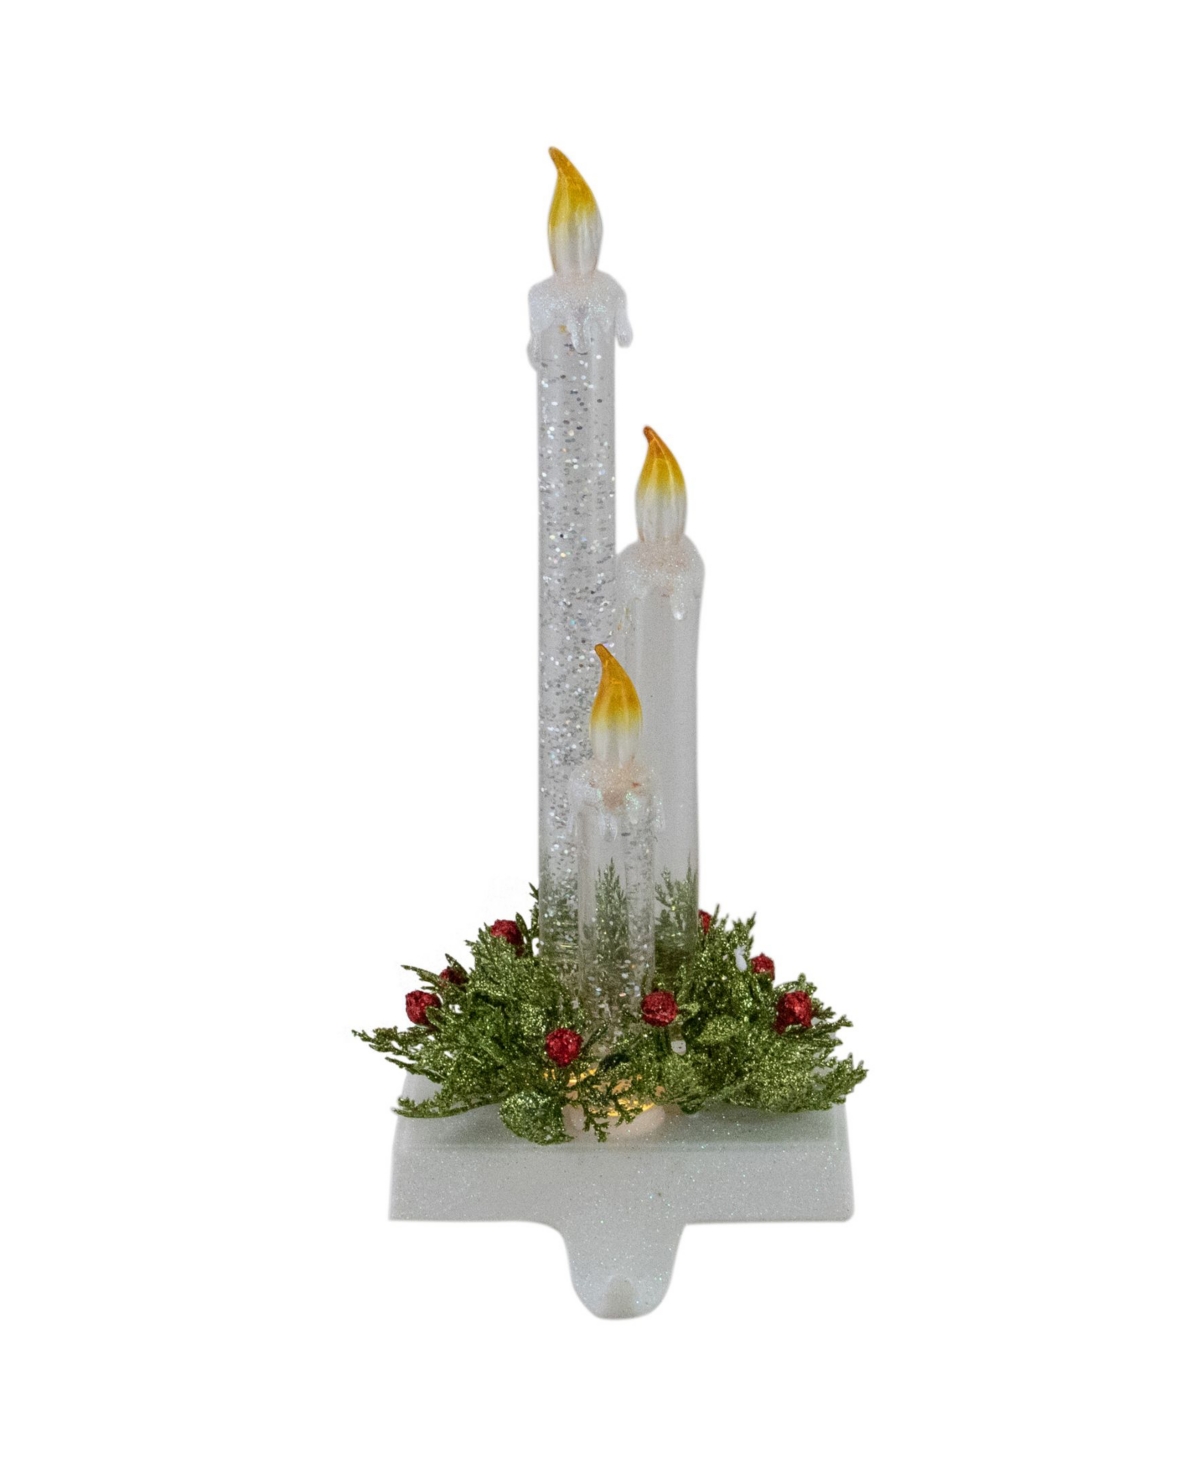 9" Battery Operated Led Lighted Candle Christmas Stocking Holder - White